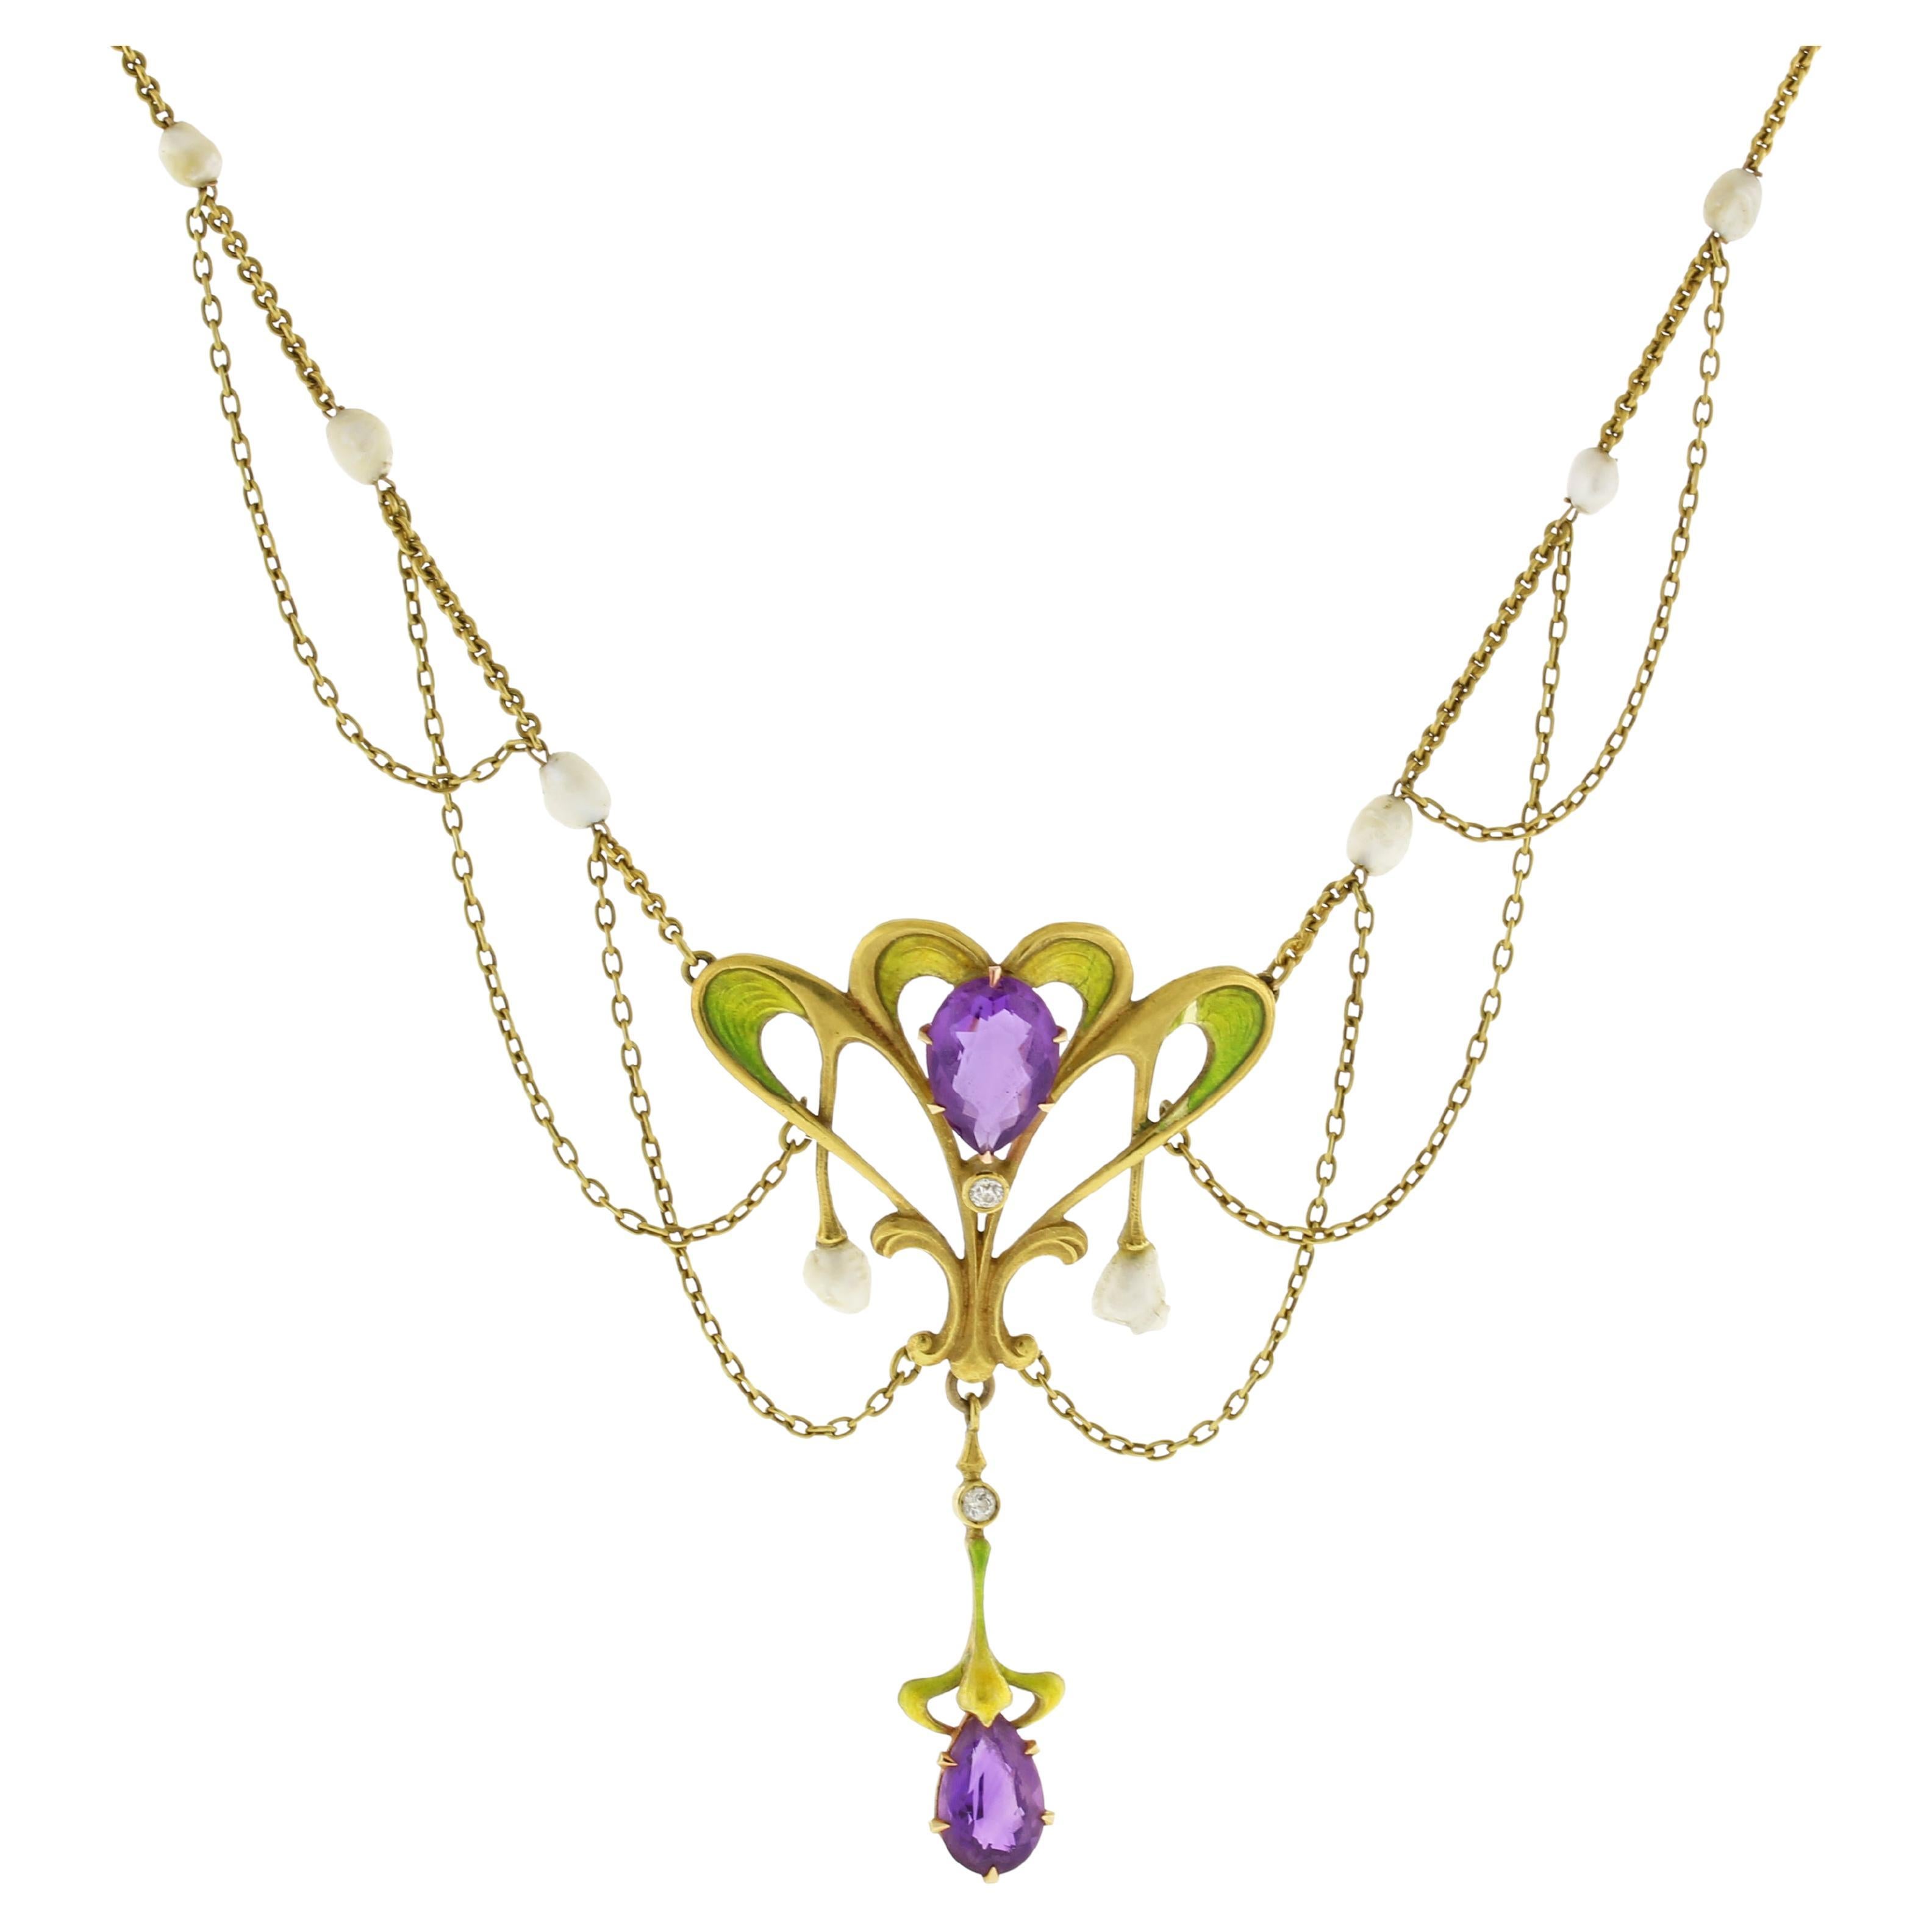 Art Nouveau Amethyst, Pearl and Diamond Festoon Necklace